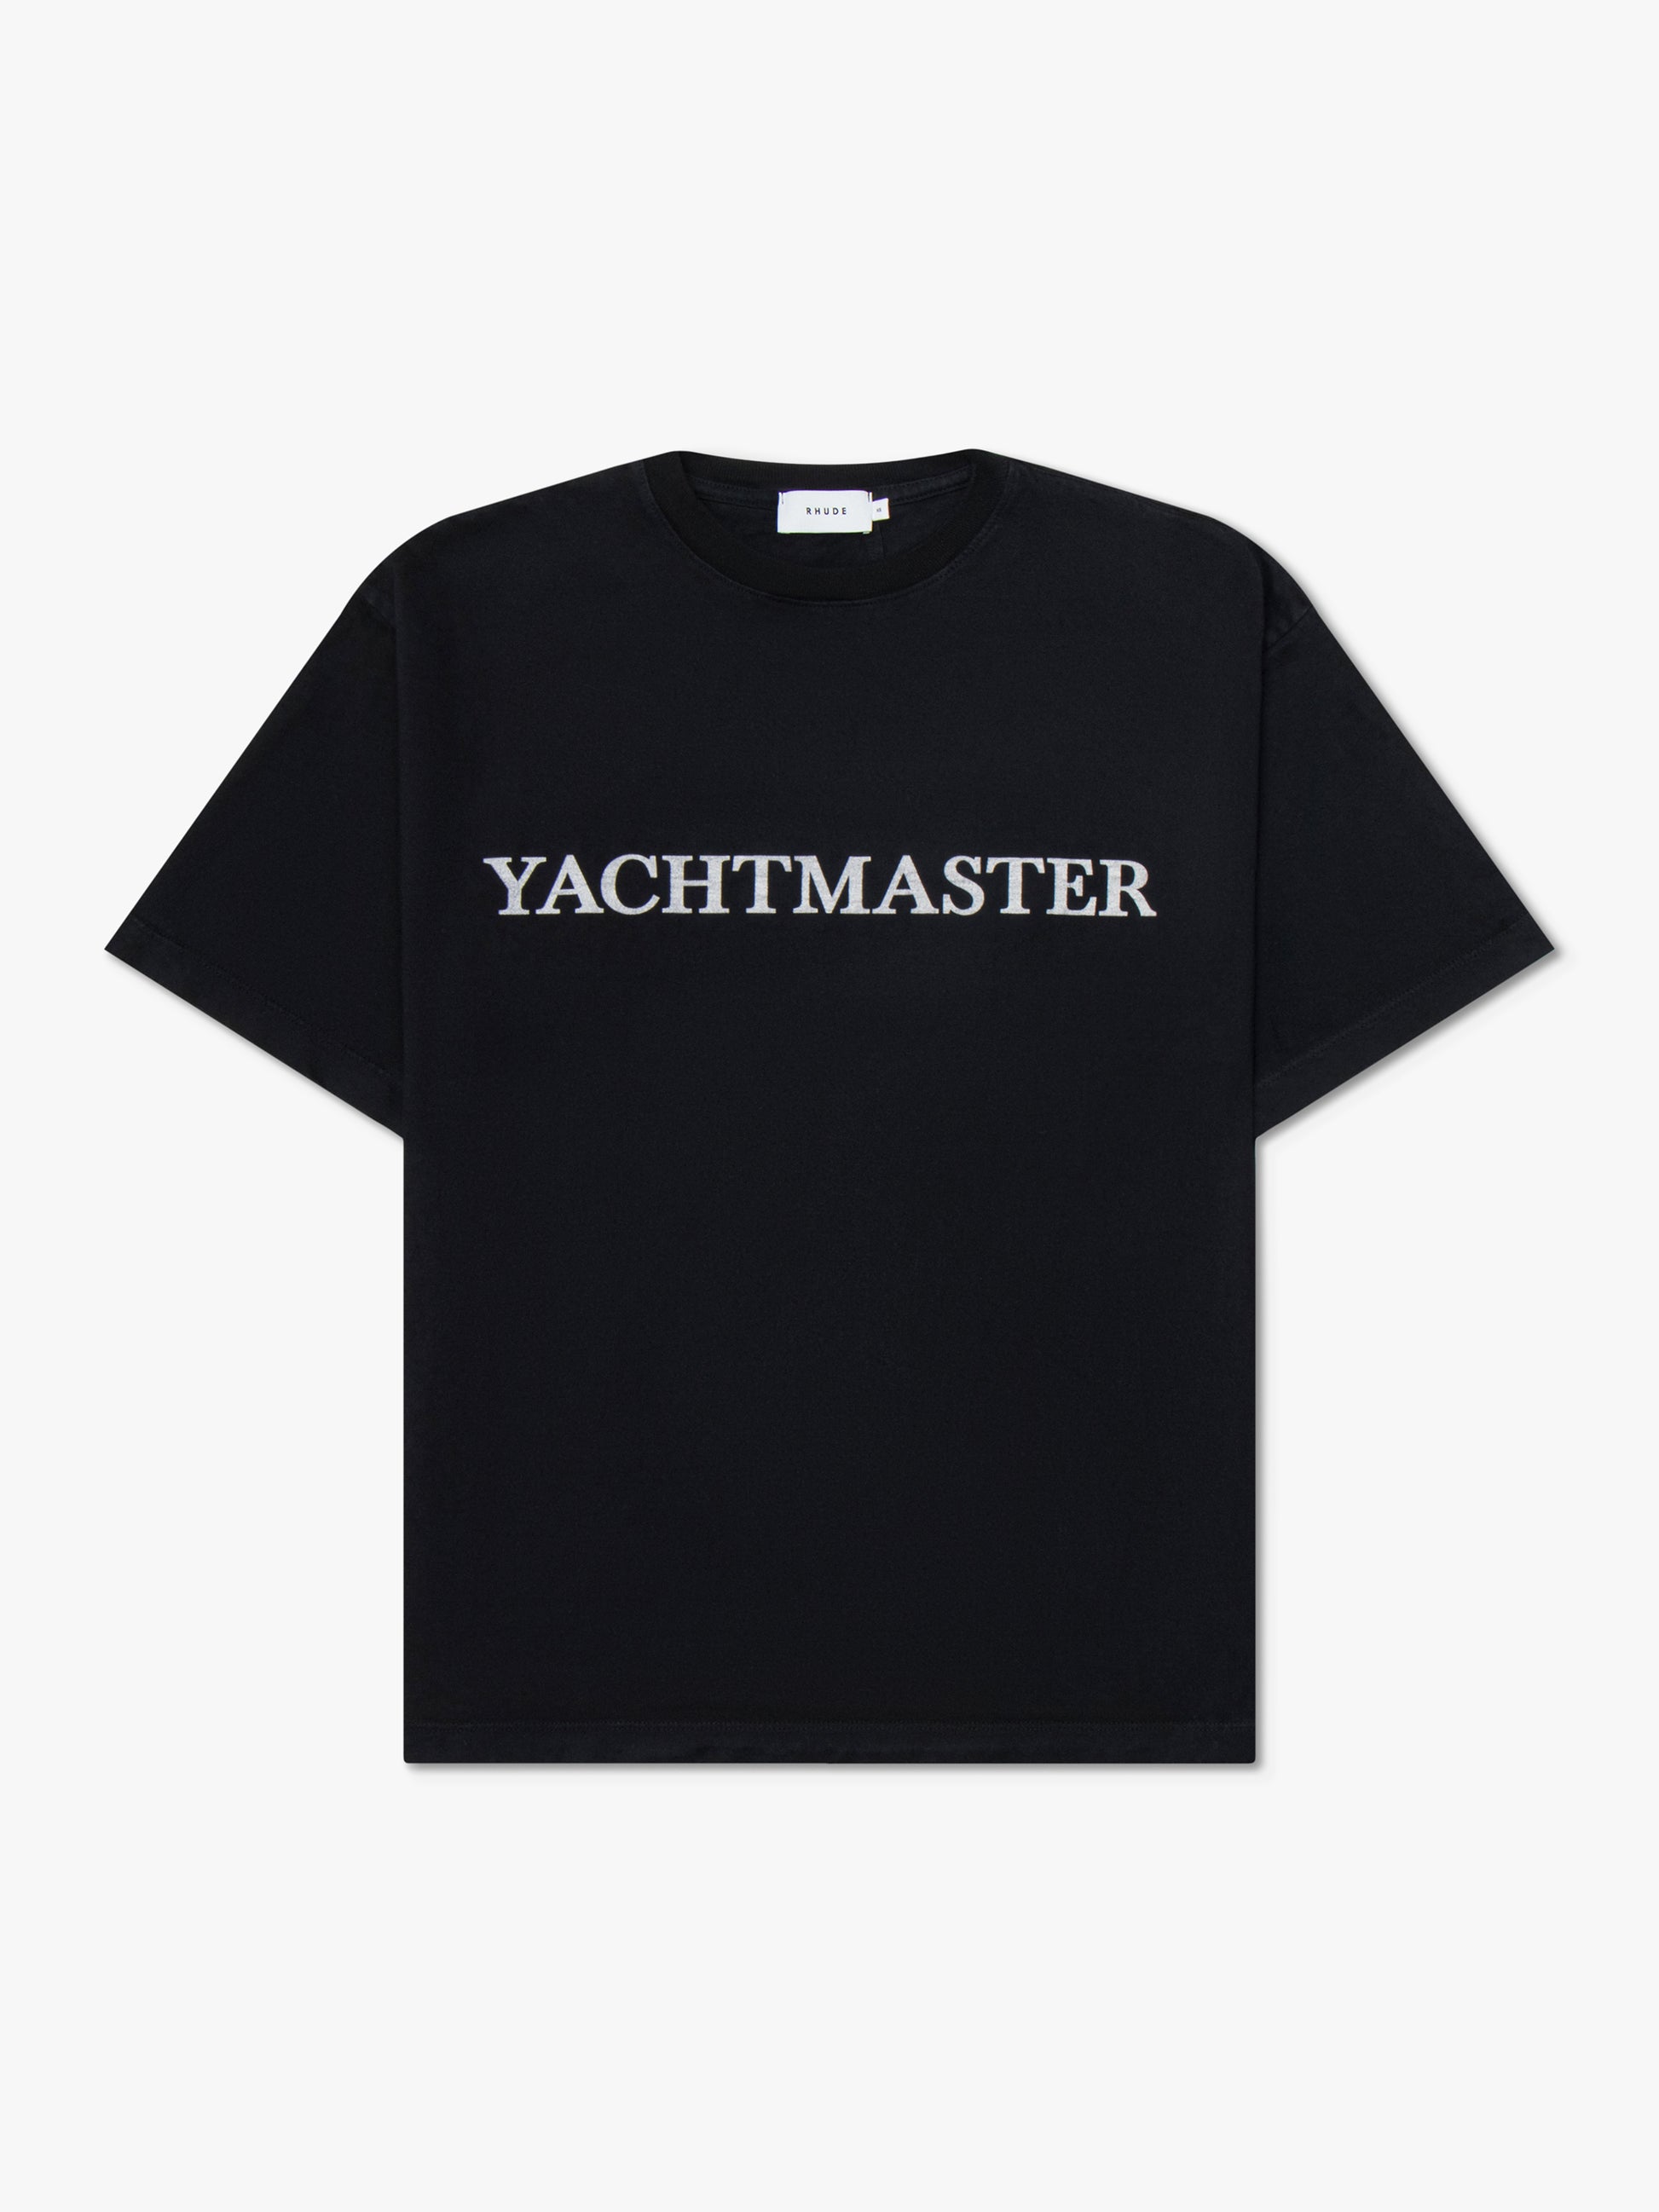 yachtmaster t shirt